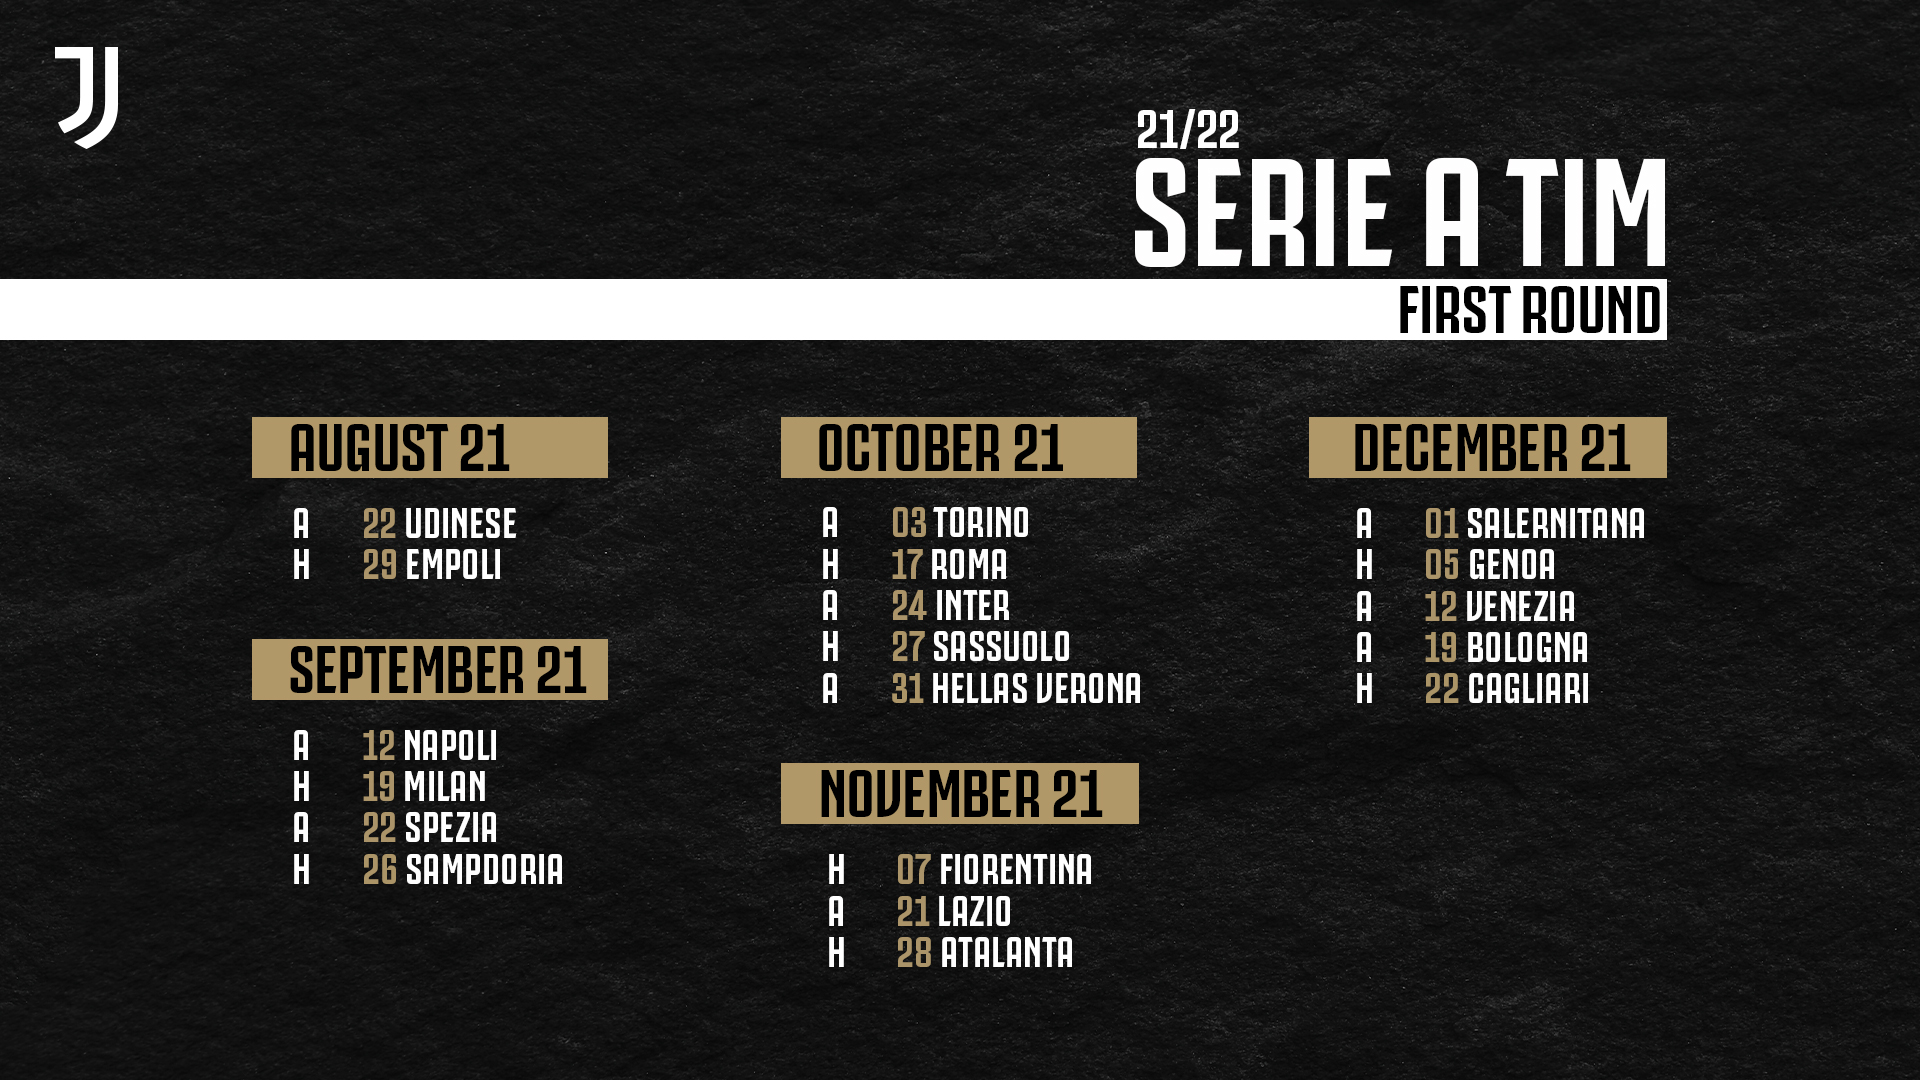 Juventusfc 新シーズン日程 21 22 セリエa の日程が発表されました 前半戦 Finoallafine Forzajuve T Co Ilwo8ynv8y Twitter